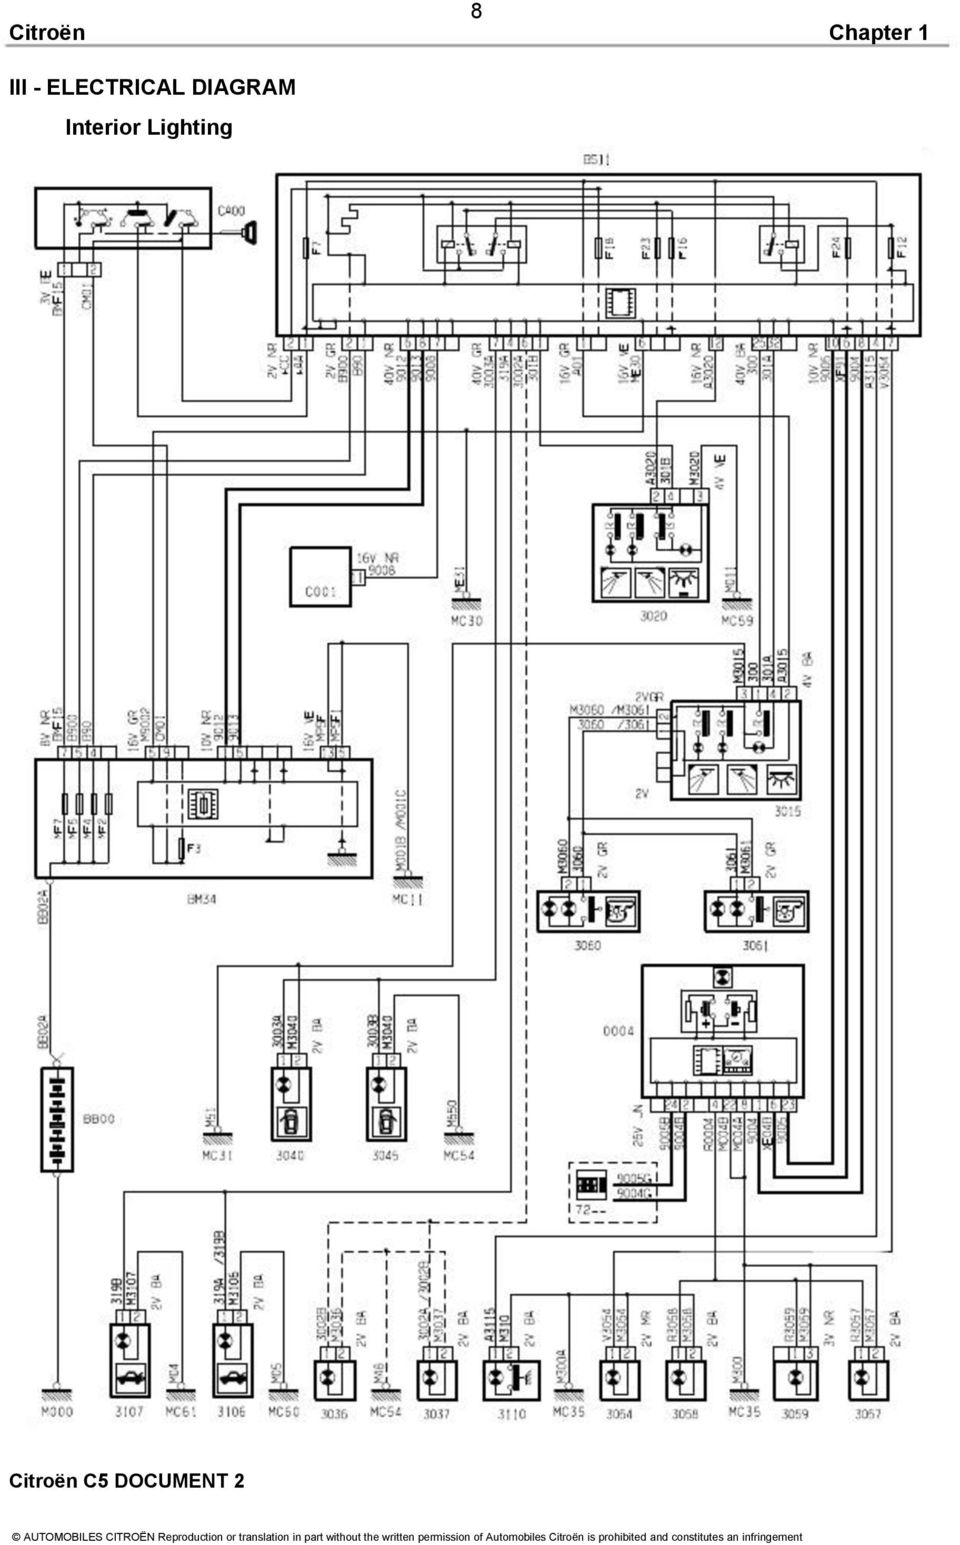 Citroen C5 Doent 2 Pdf Free, Citroen C5 X7 Wiring Diagram